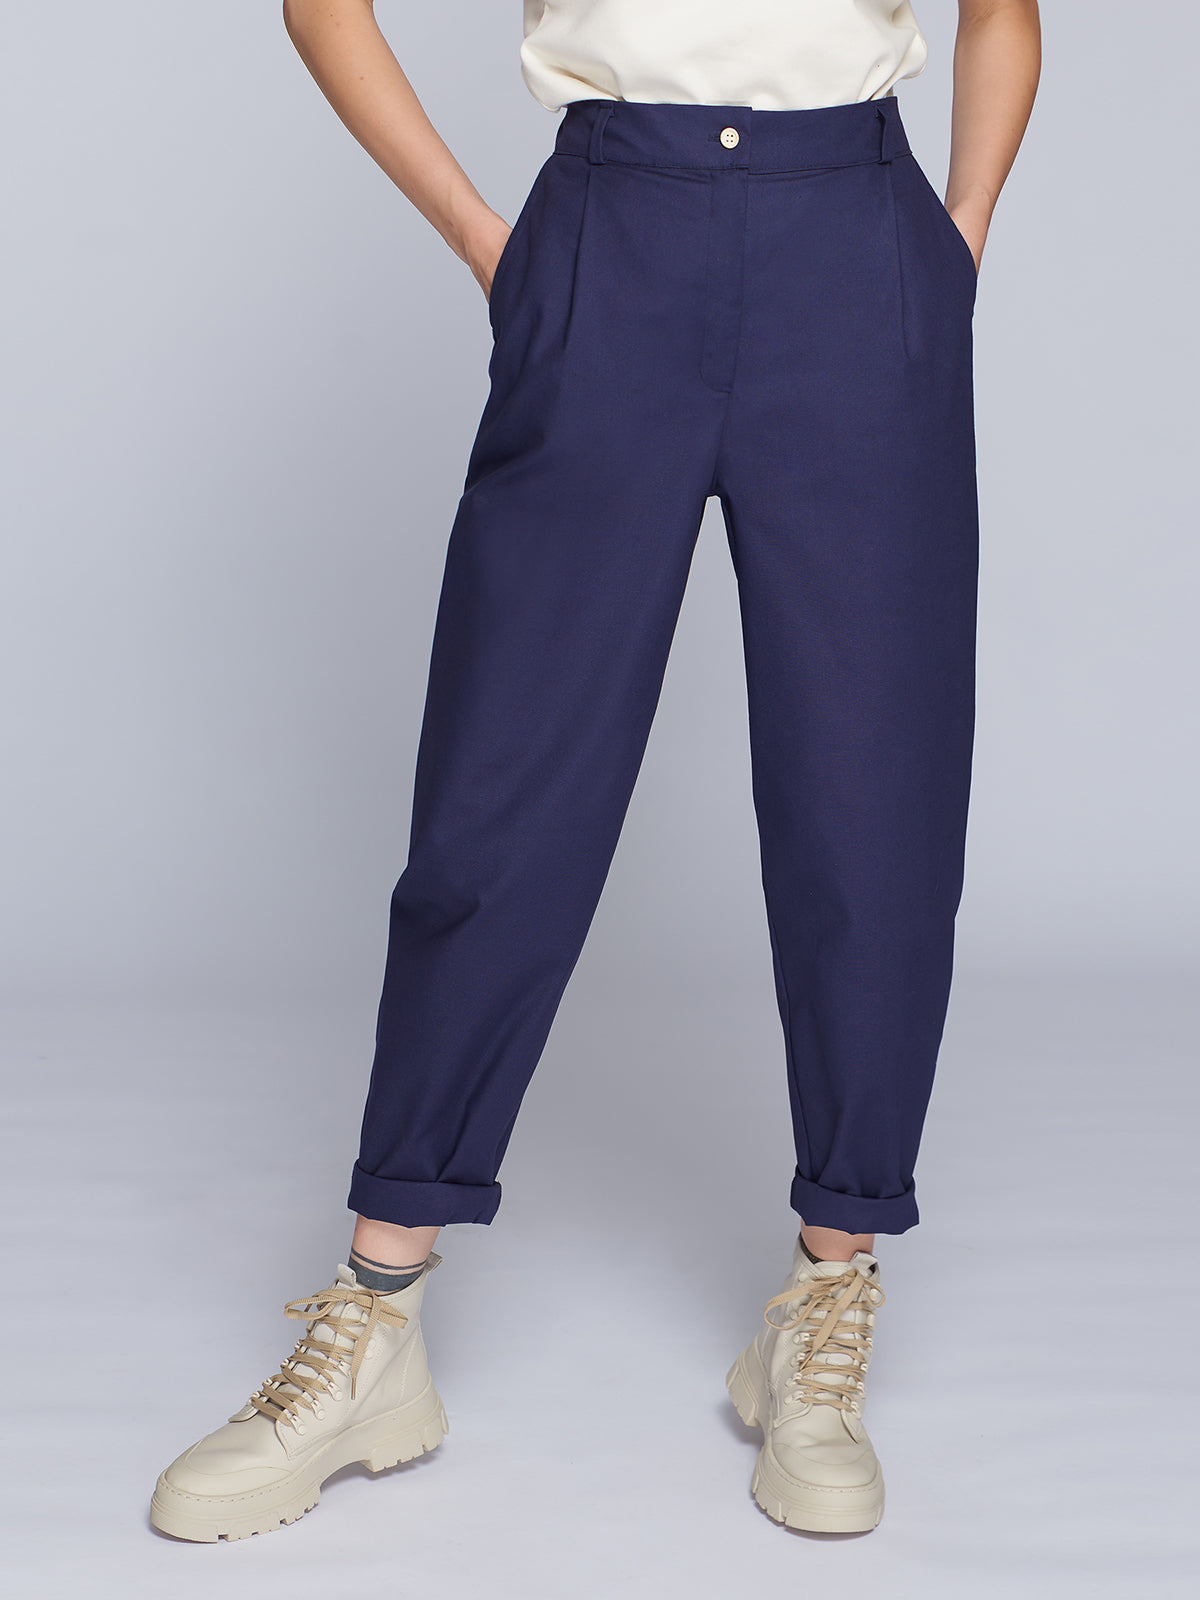 Dark blue cotton slouchy women's pants